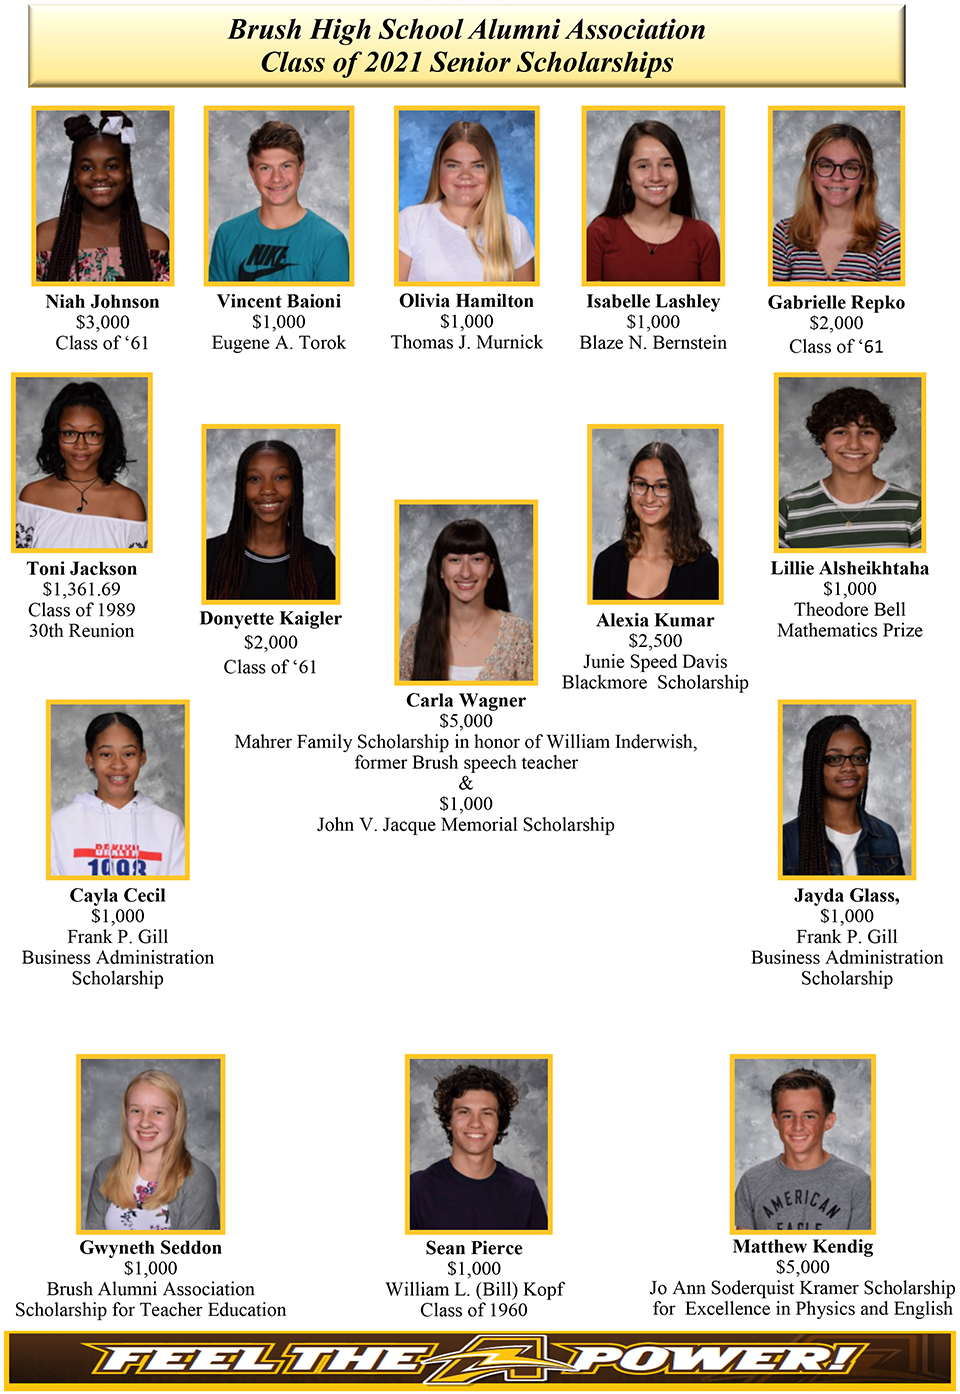 Photos of Brush High School Alumni Association Class of 2021 Senior Scholarship winners.